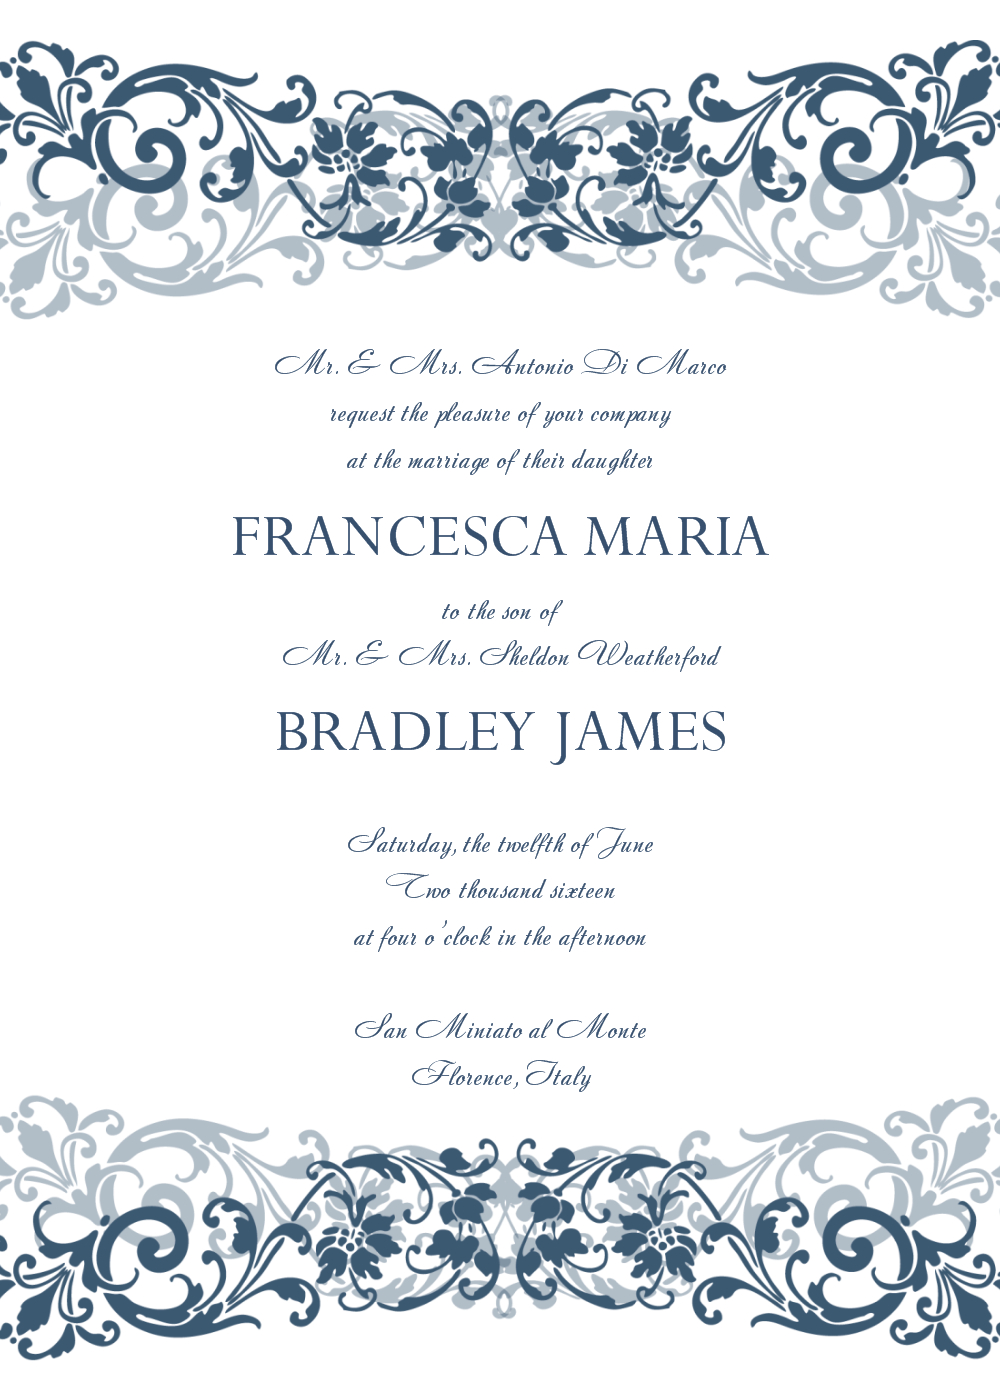 Free Wedding Invitation Templates For Word | Wedding Invitation - Free Printable Wedding Invitation Templates For Word